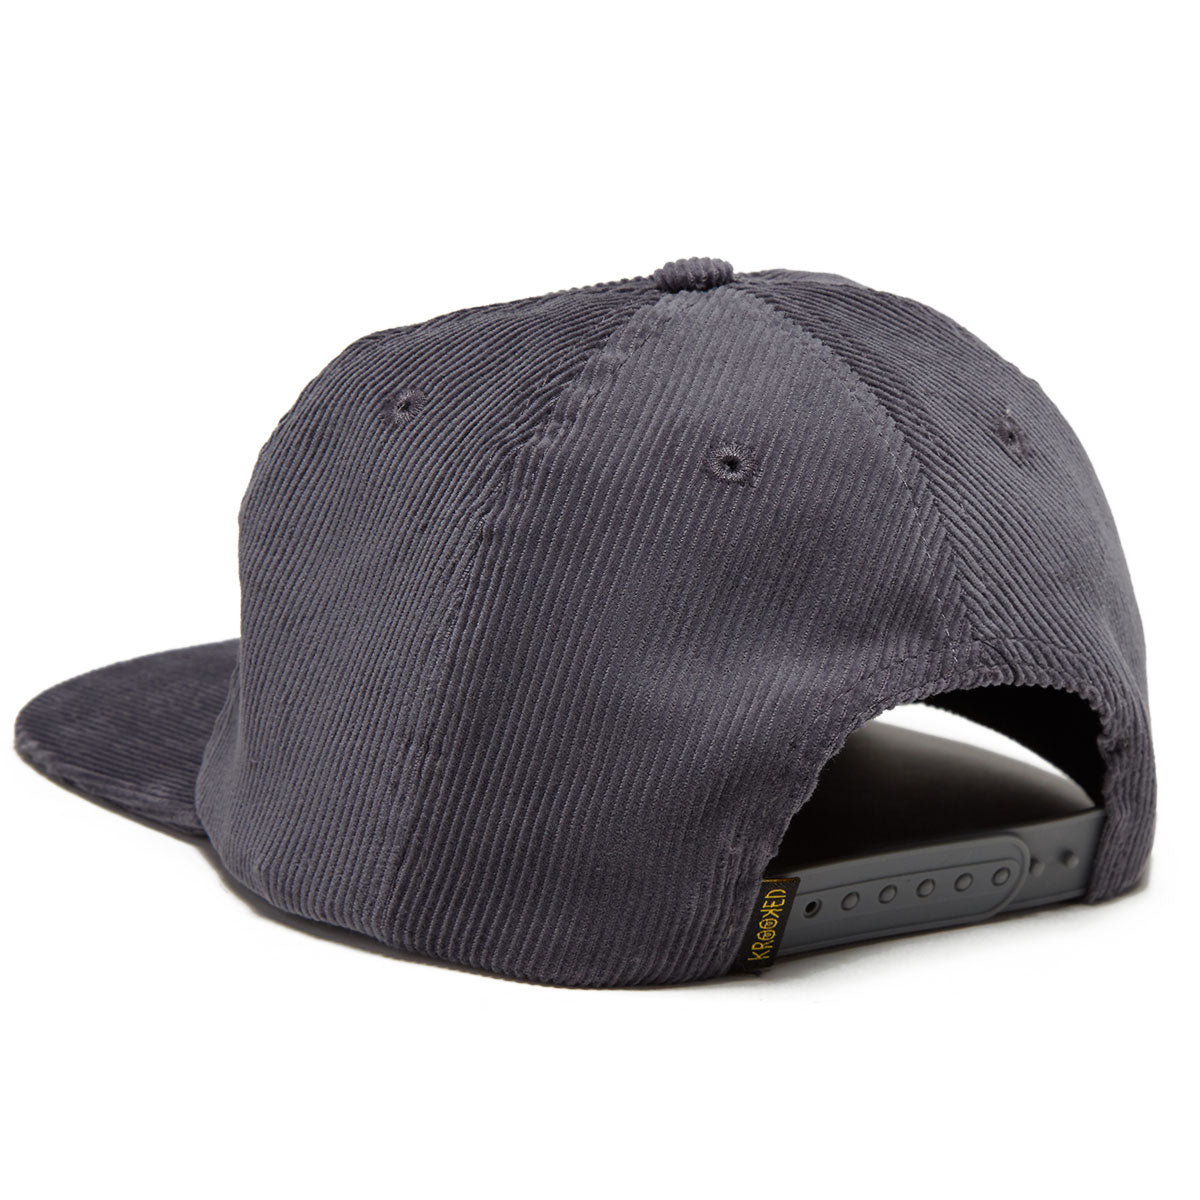 Krooked Style Snapback Hat - Charcoal image 2